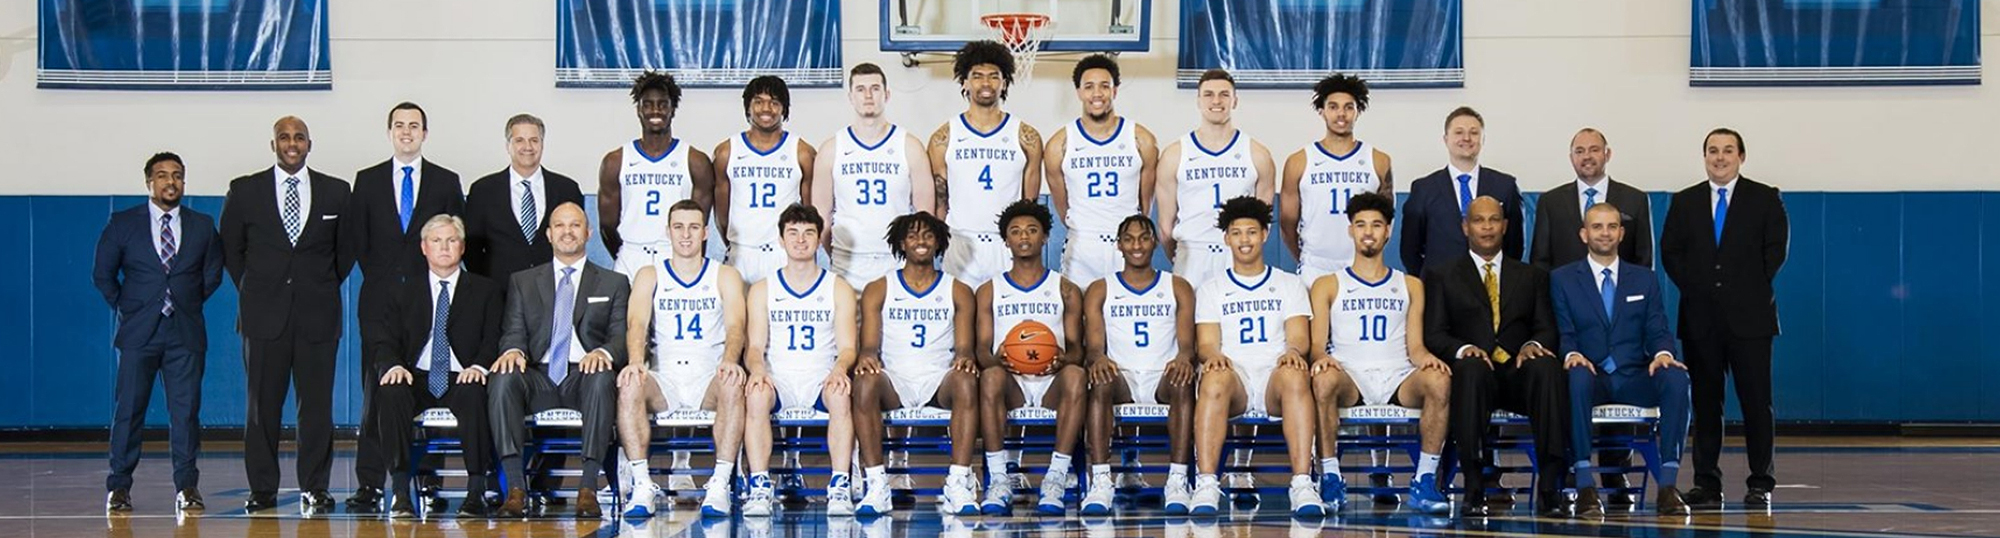 Kentucky University Basketball Team